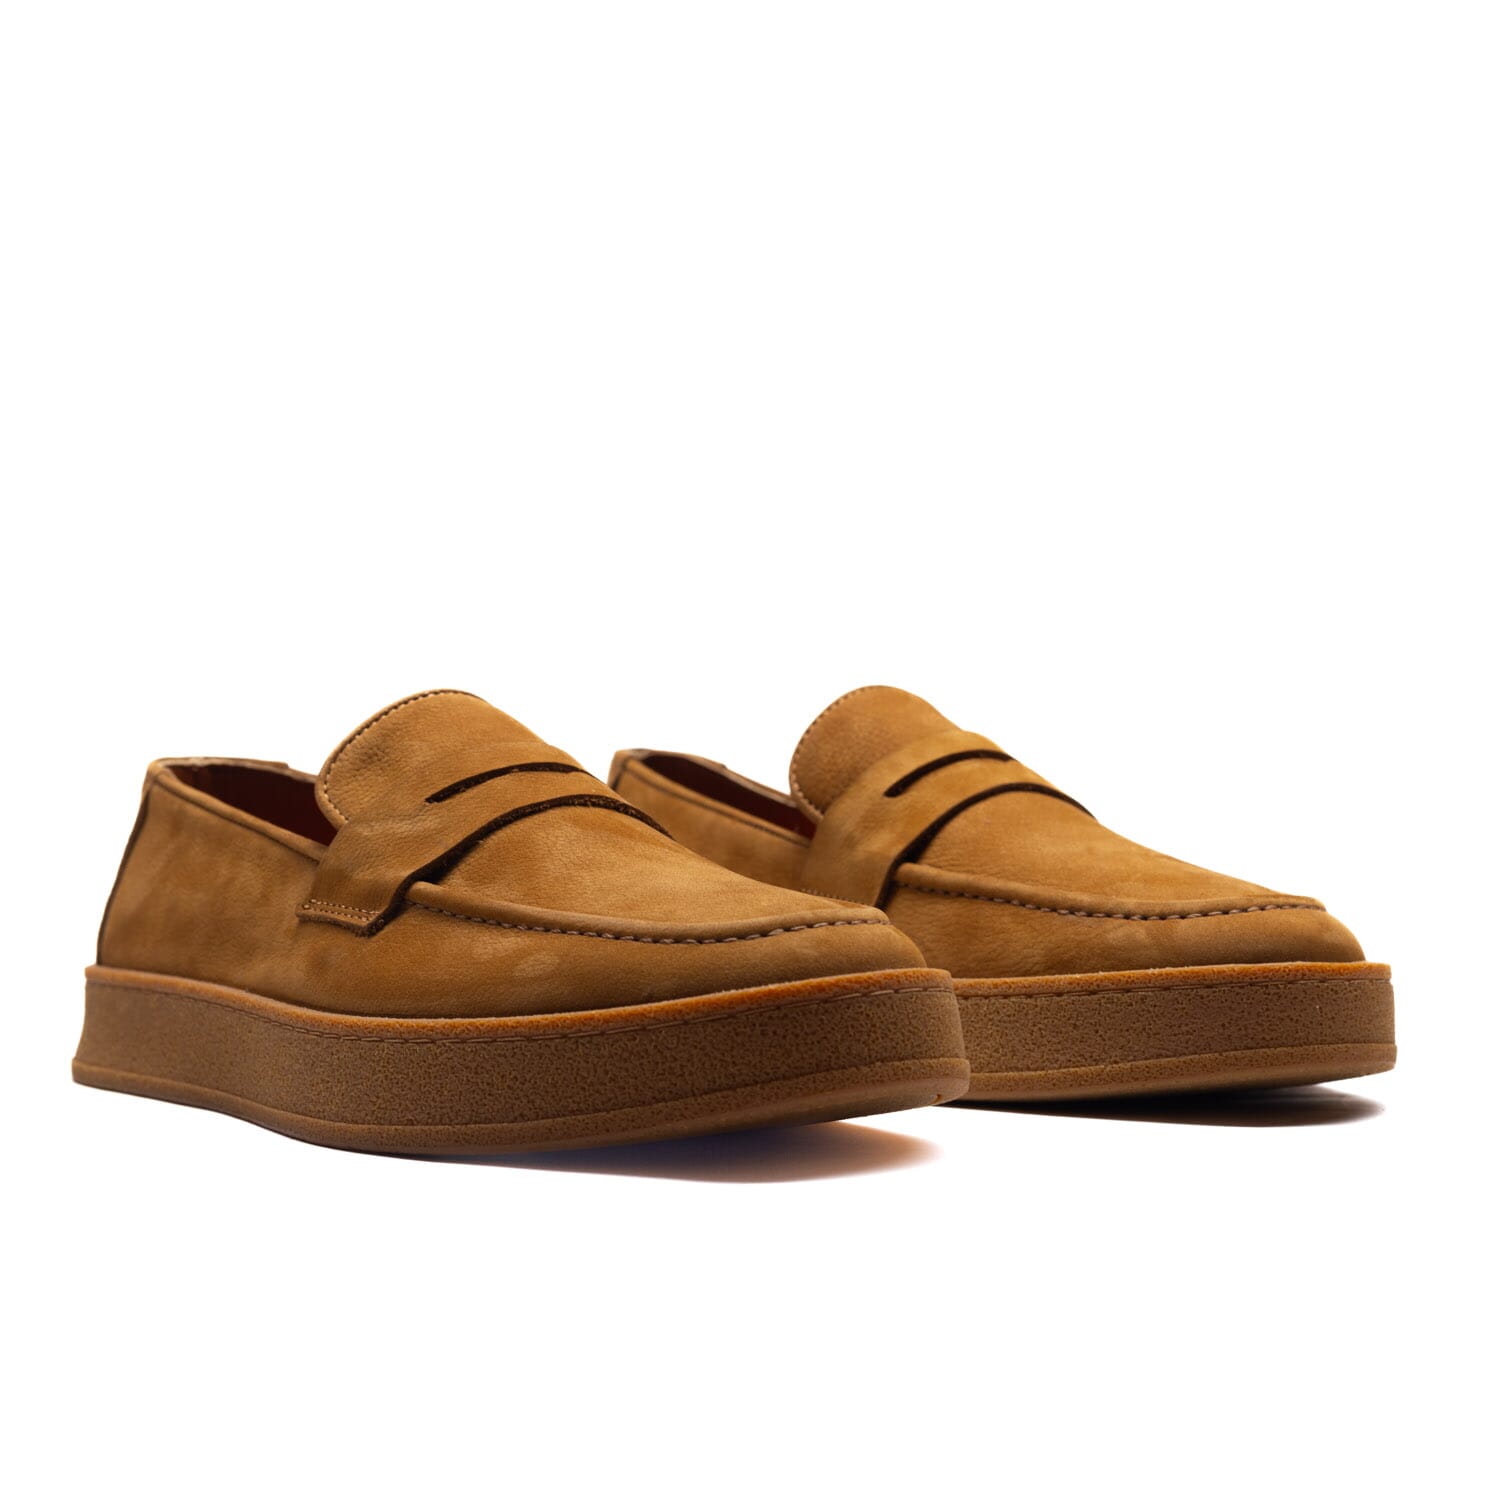 Bulletti – 2214 – Tan – Perocili Shoes